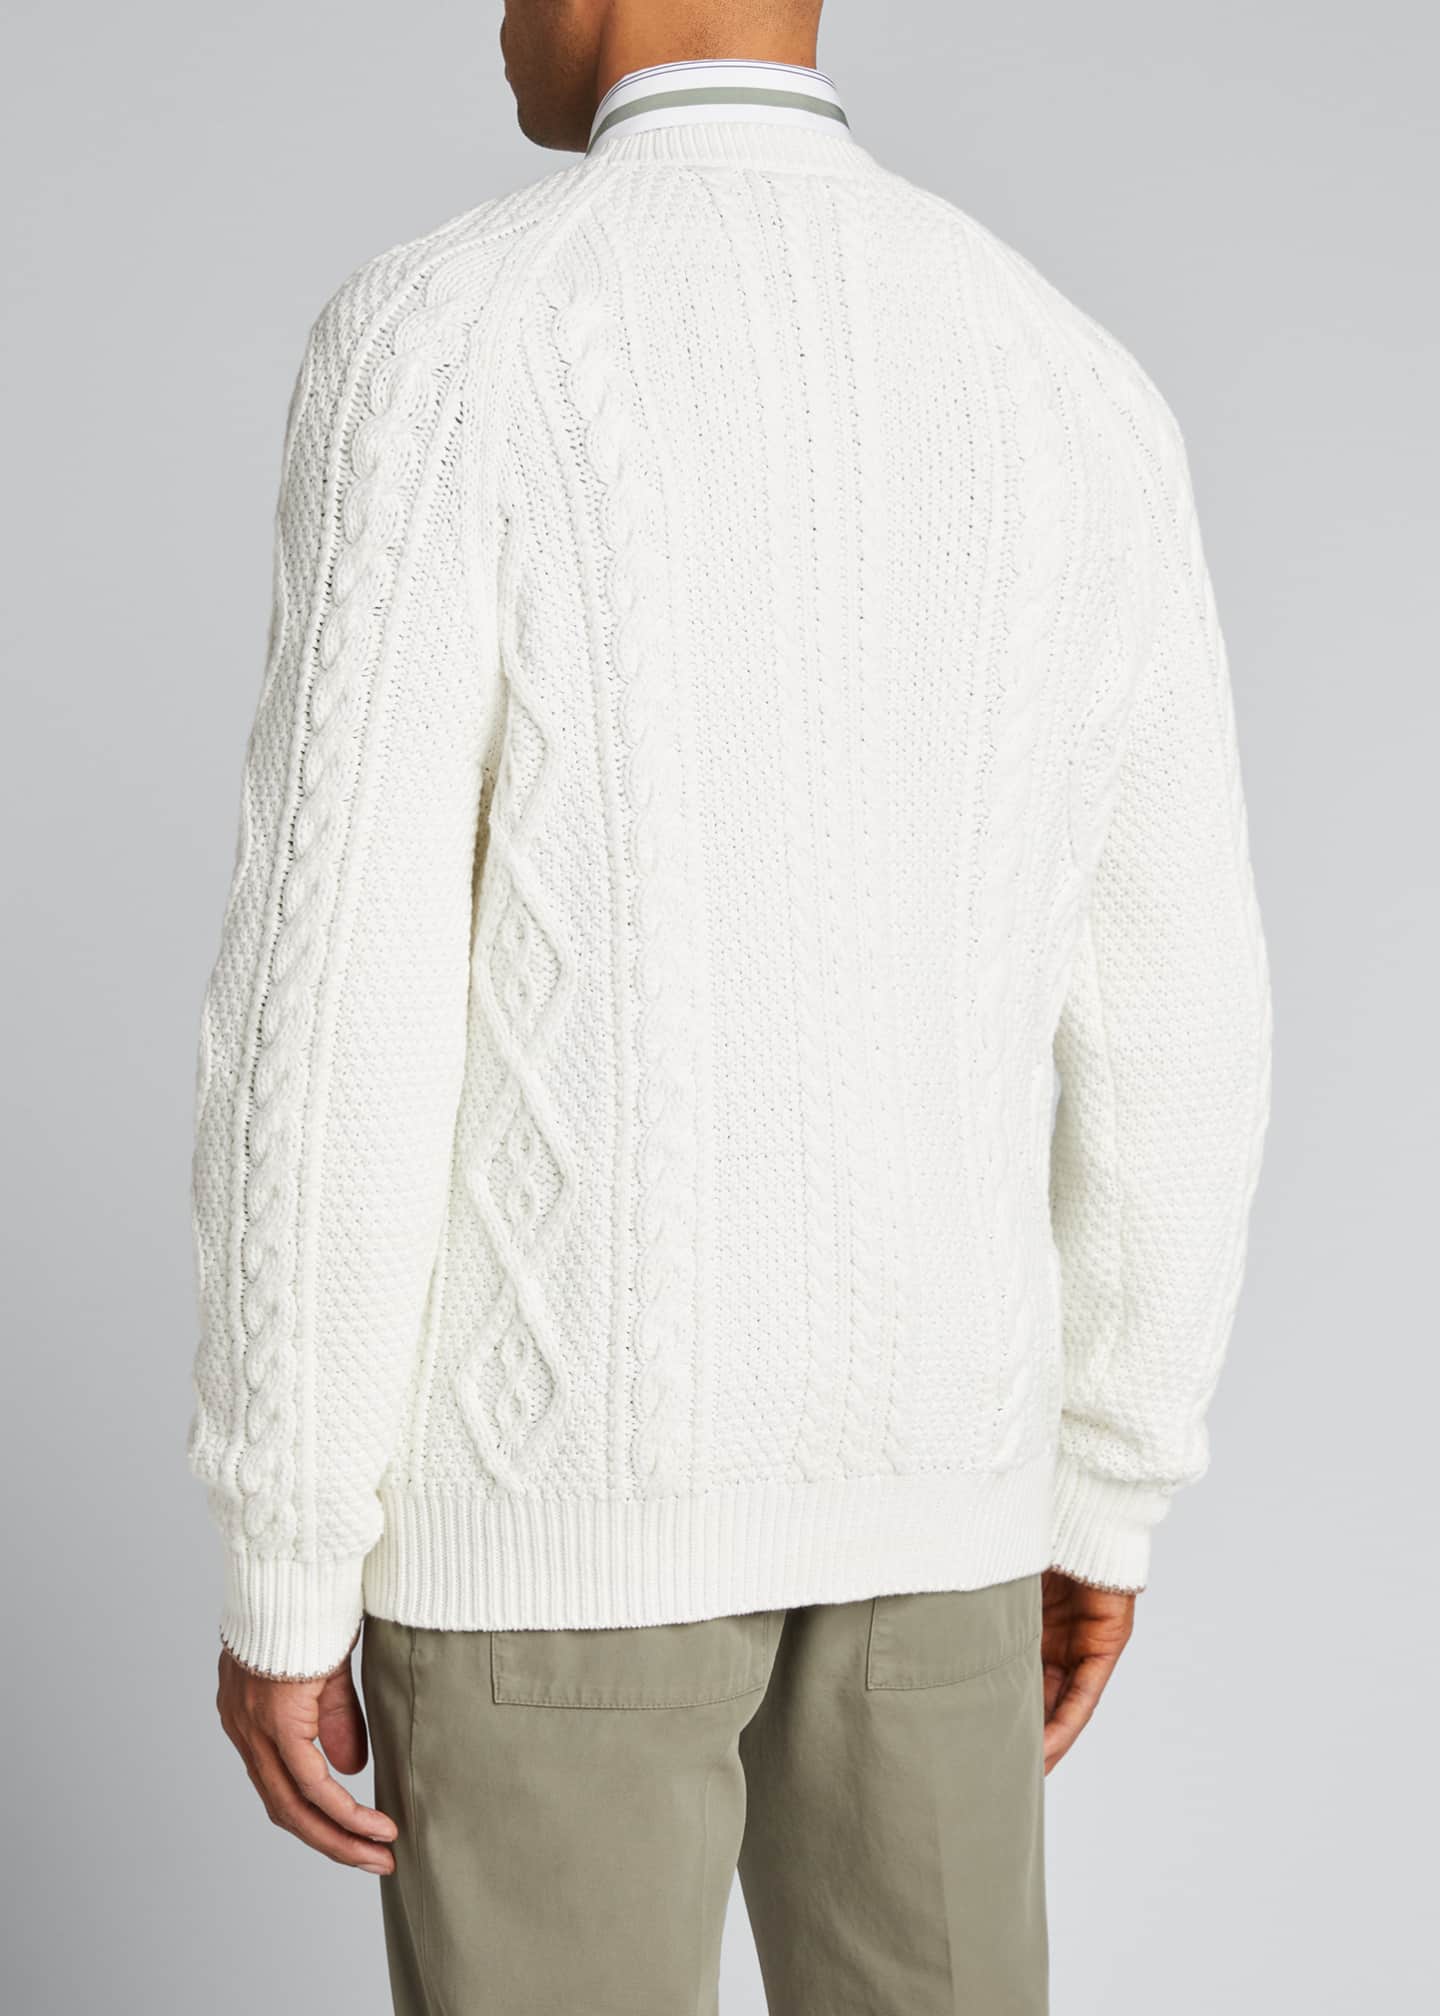 Brunello Cucinelli Men's Cotton Novel Cable-Knit Sweater - Bergdorf Goodman